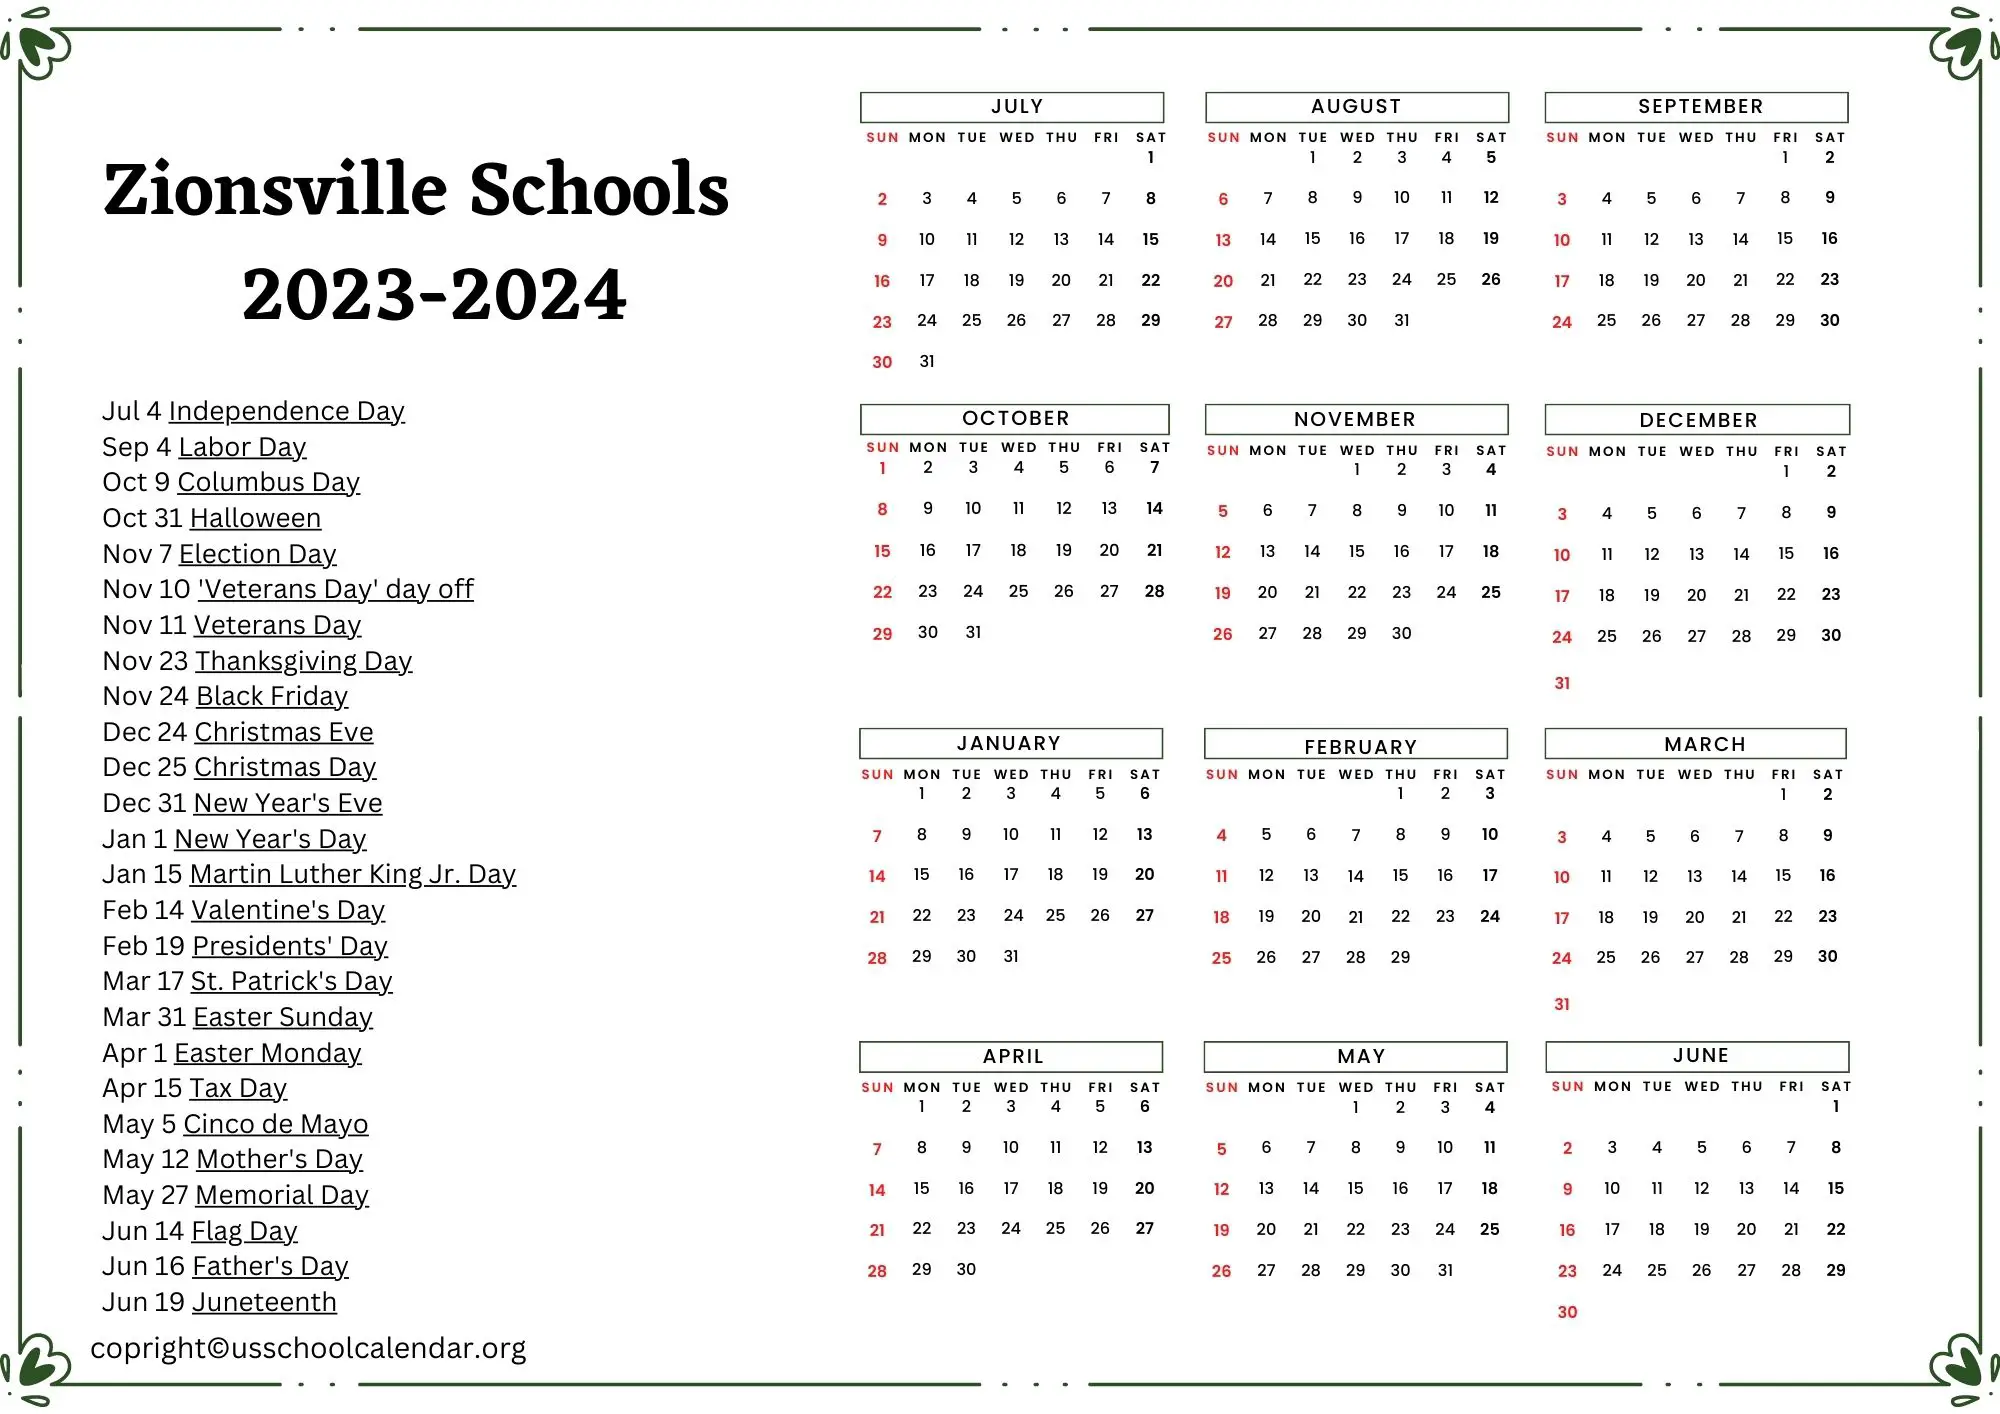 Zionsville Schools Calendar with Holidays 2023 2024